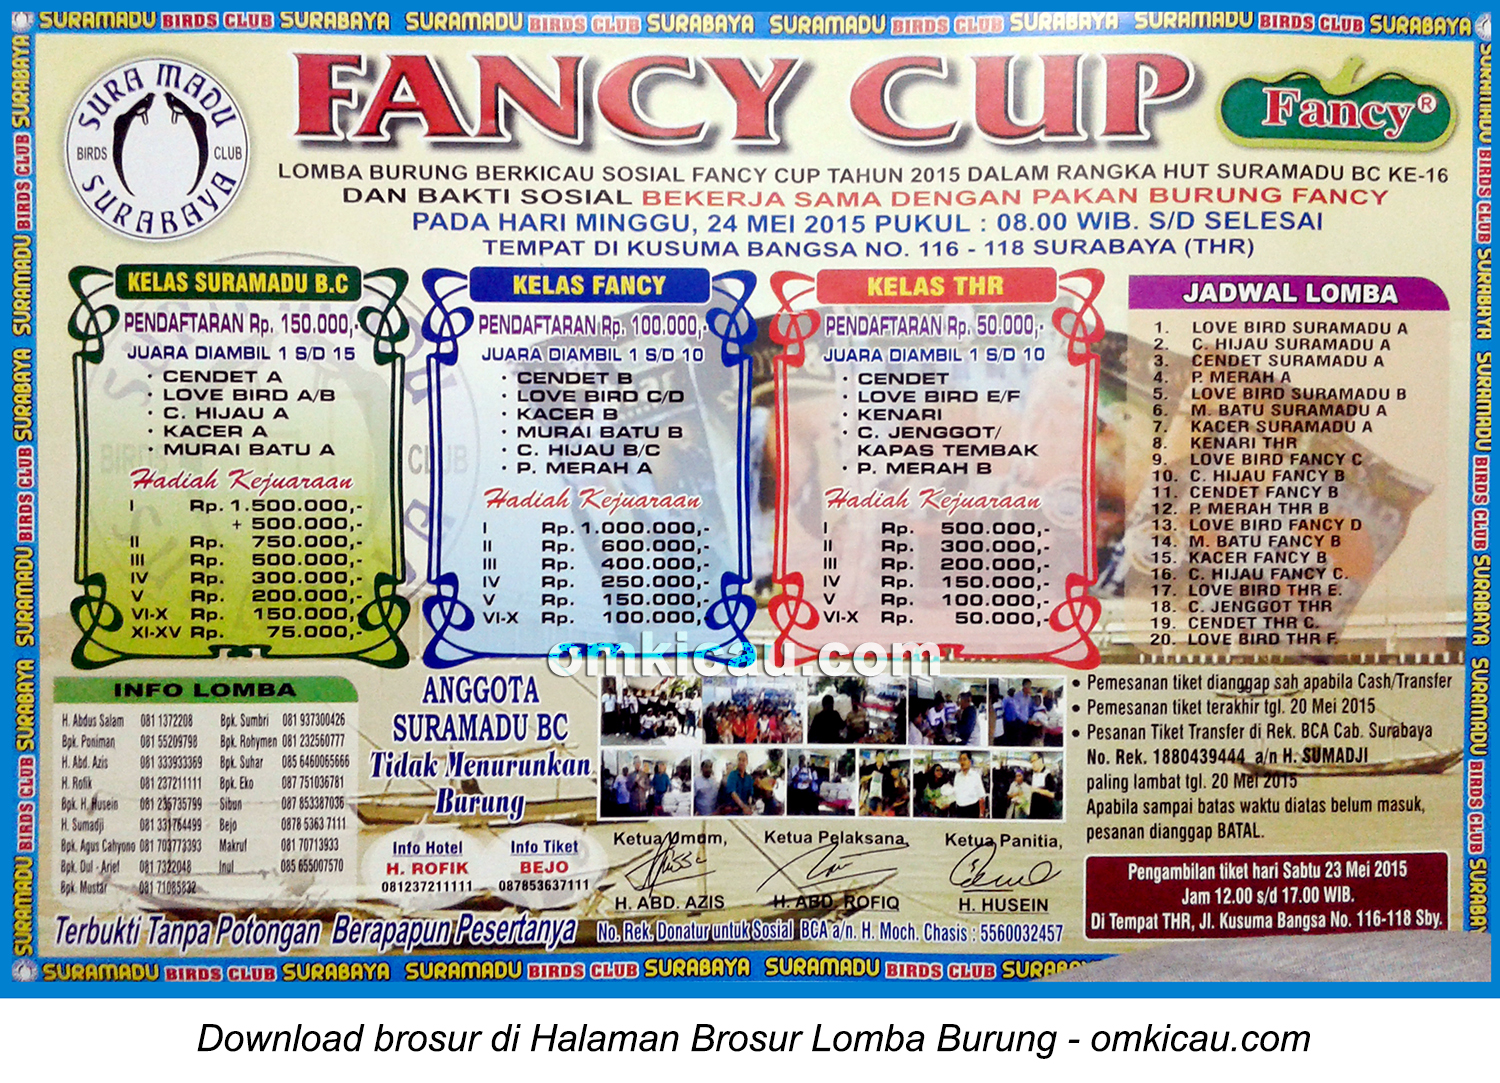 Brosur Lomba Burung Berkicau Fancy Cup, Surabaya, 24 Mei 2015